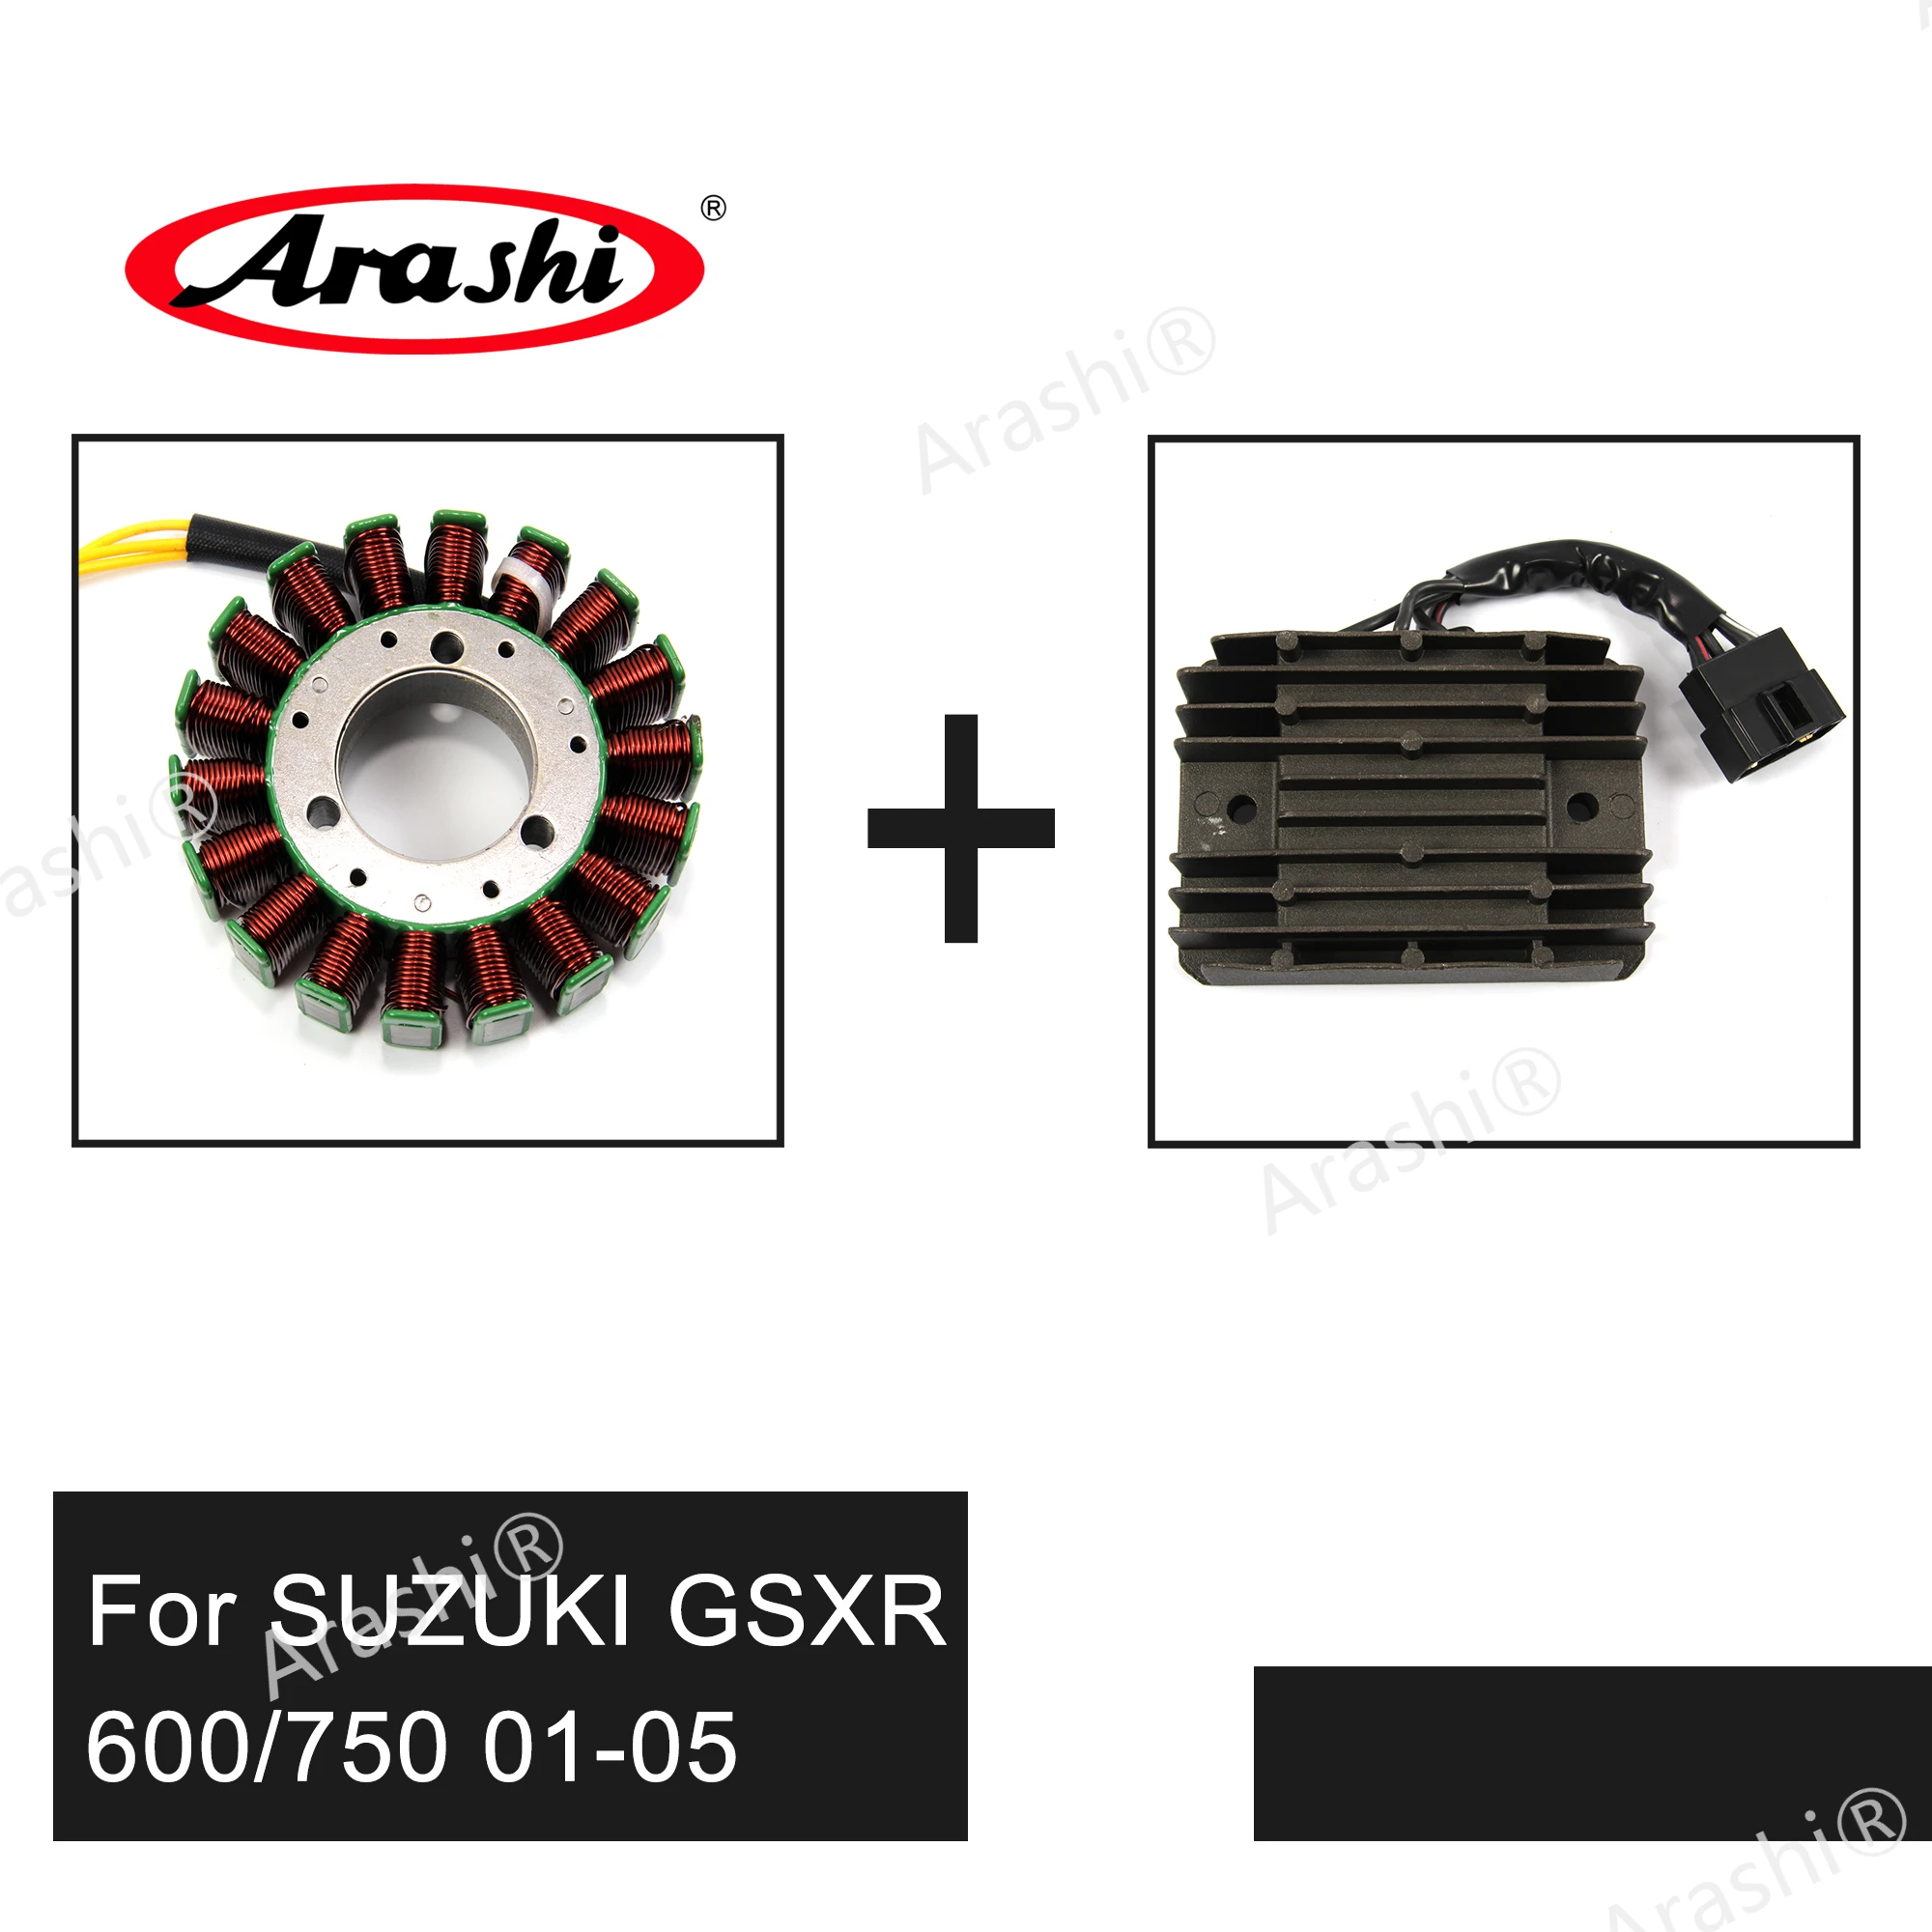 

Arashi для SUZUKI GSXR GSX-R 600 750 2001-2005, регулятор напряжения, катушка статора двигателя GSXR600 GSXR750 2001 2002 2003